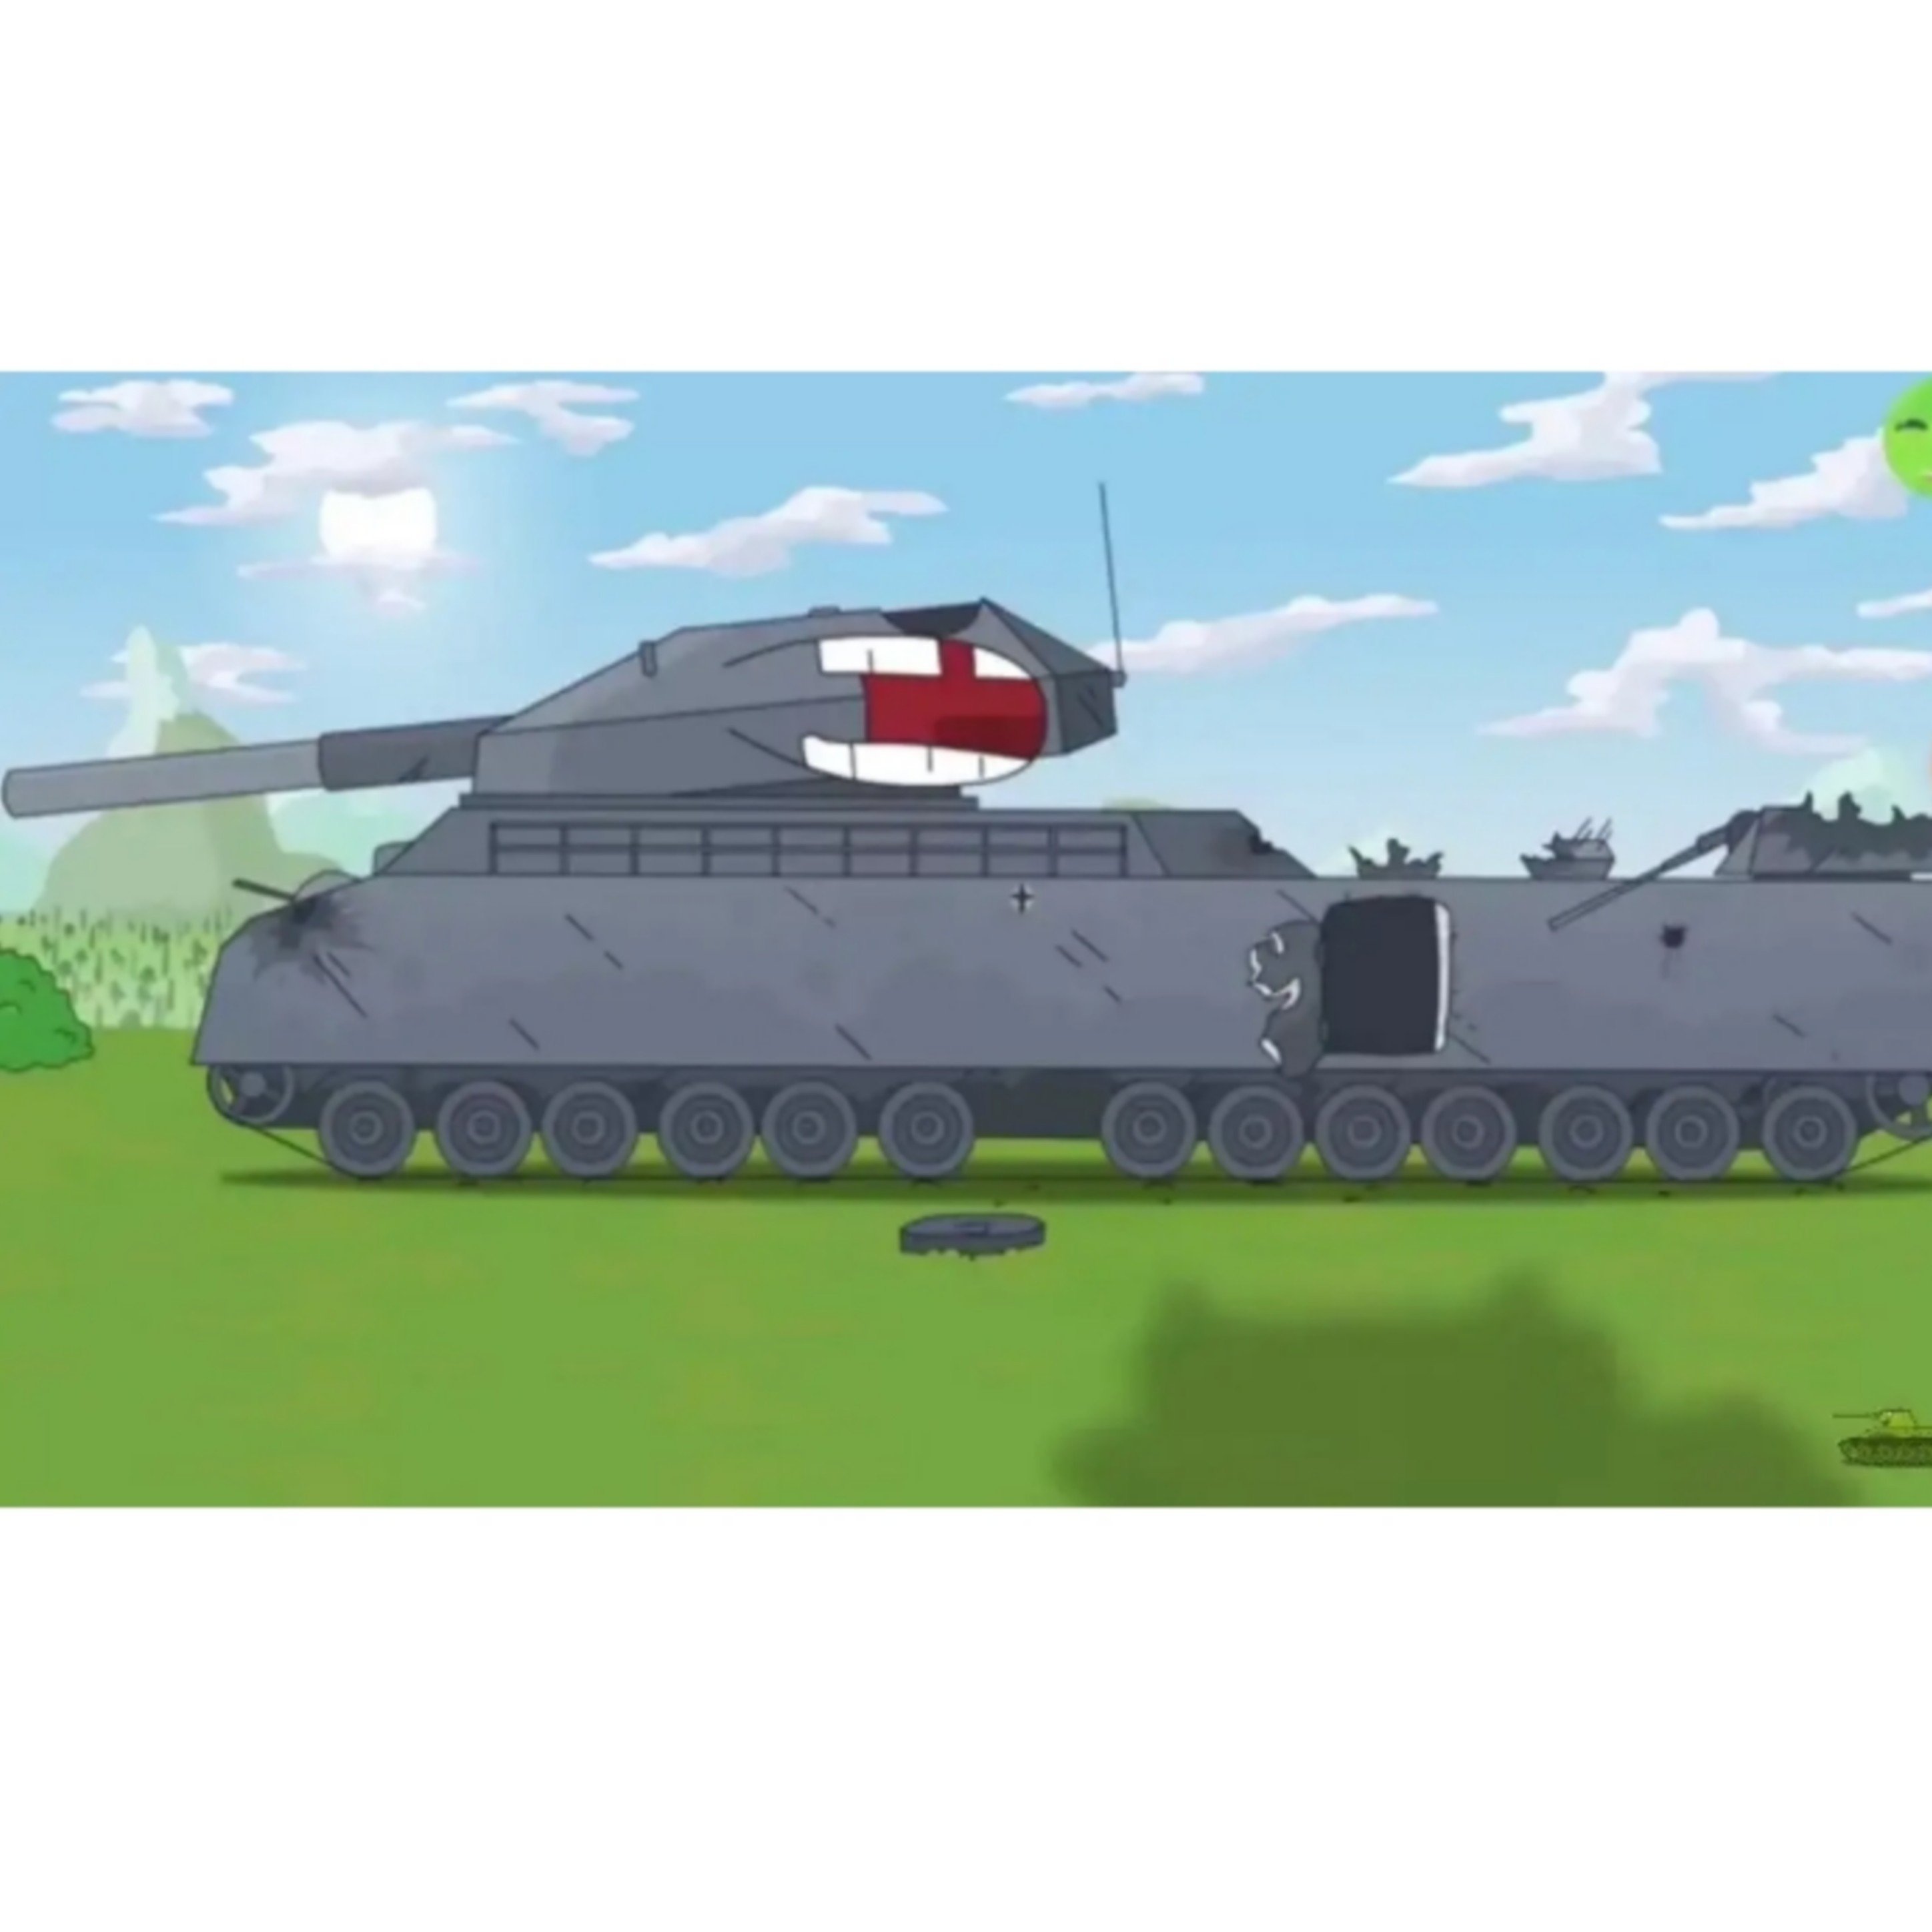 Ратте танк геранд. Кв-44 танк Геранд. Королевский РАТТЕ танк. Королевский РАТТЕ танк Геранд. Левиафан танк Геранд.